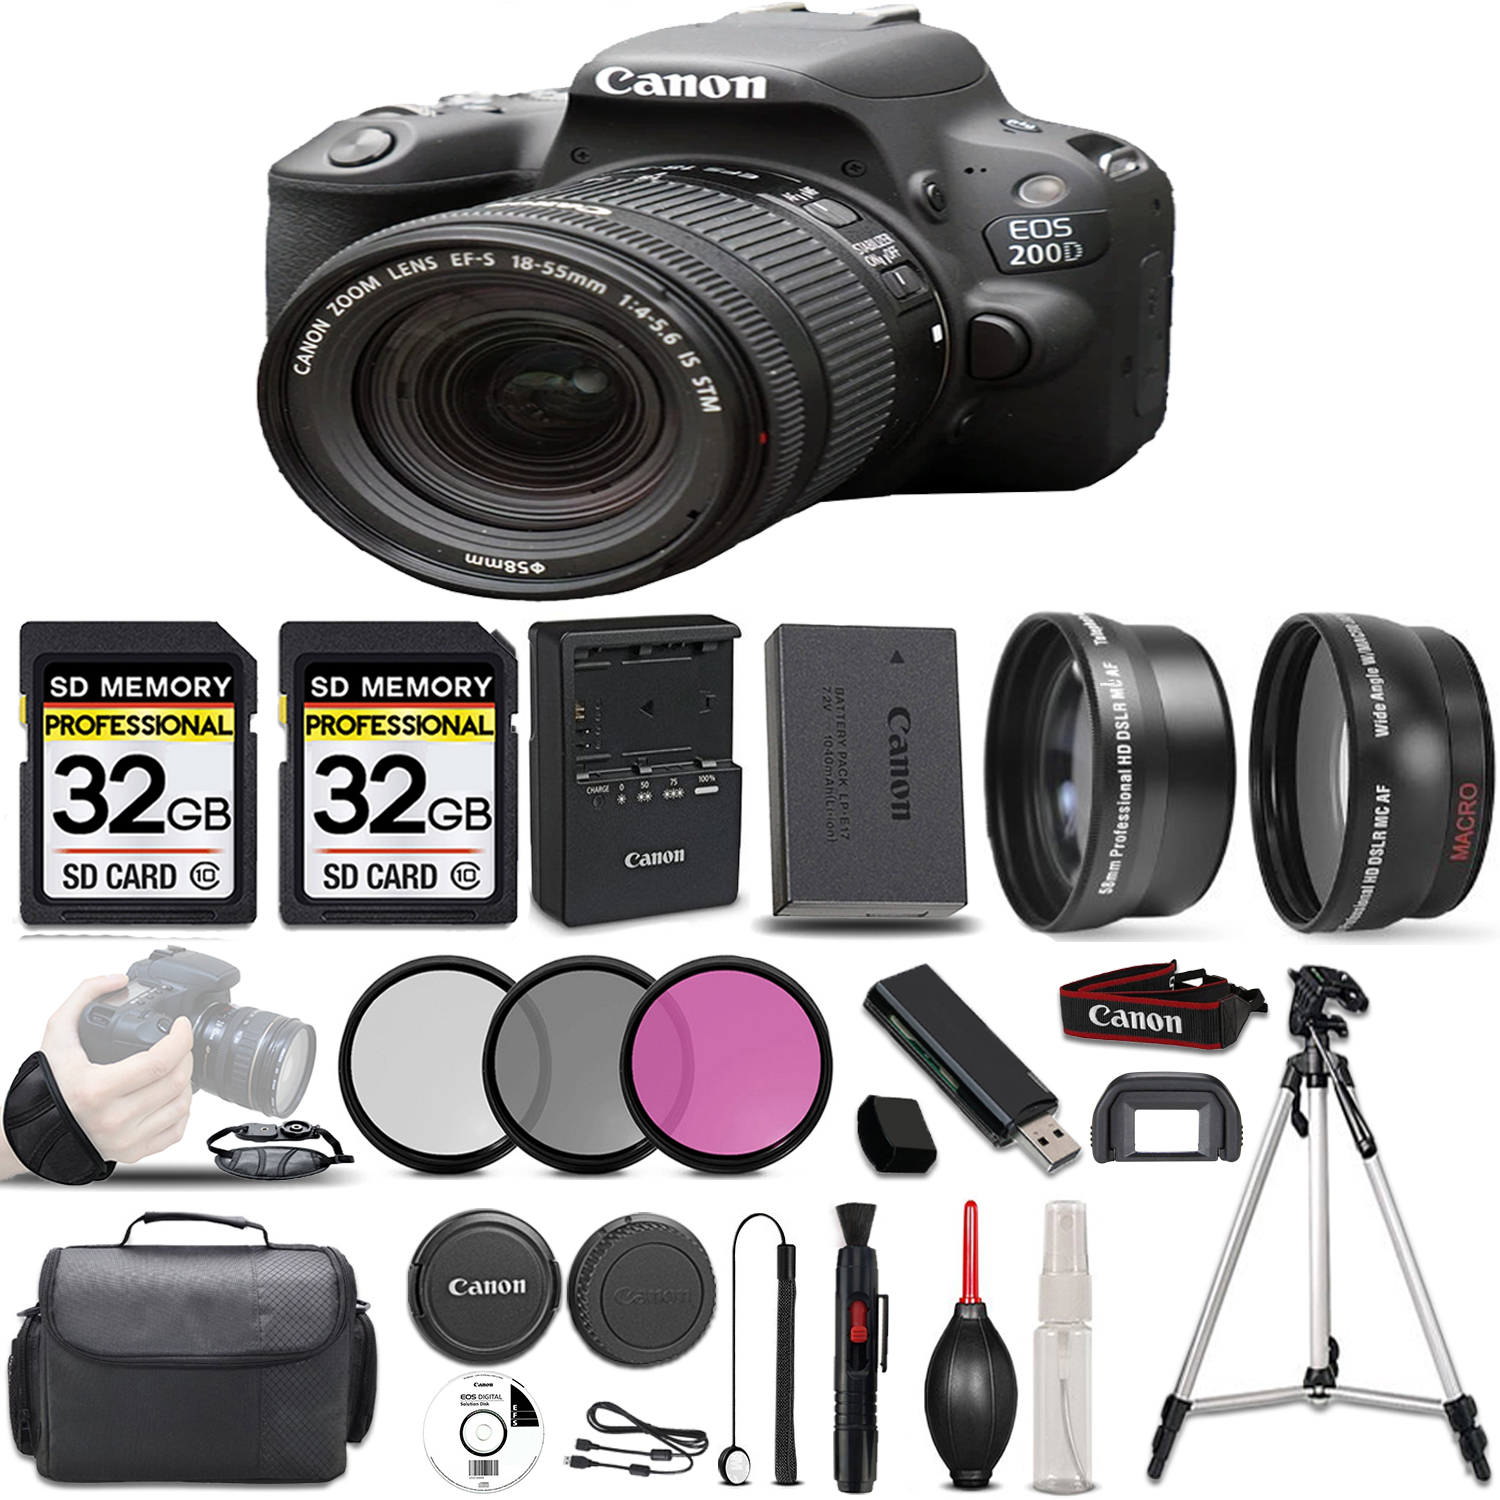 EOS Rebel 200D DSLR Camera(Black) + 18-55mm STM Lens + 64GB - Accessory Kit *FREE SHIPPING*